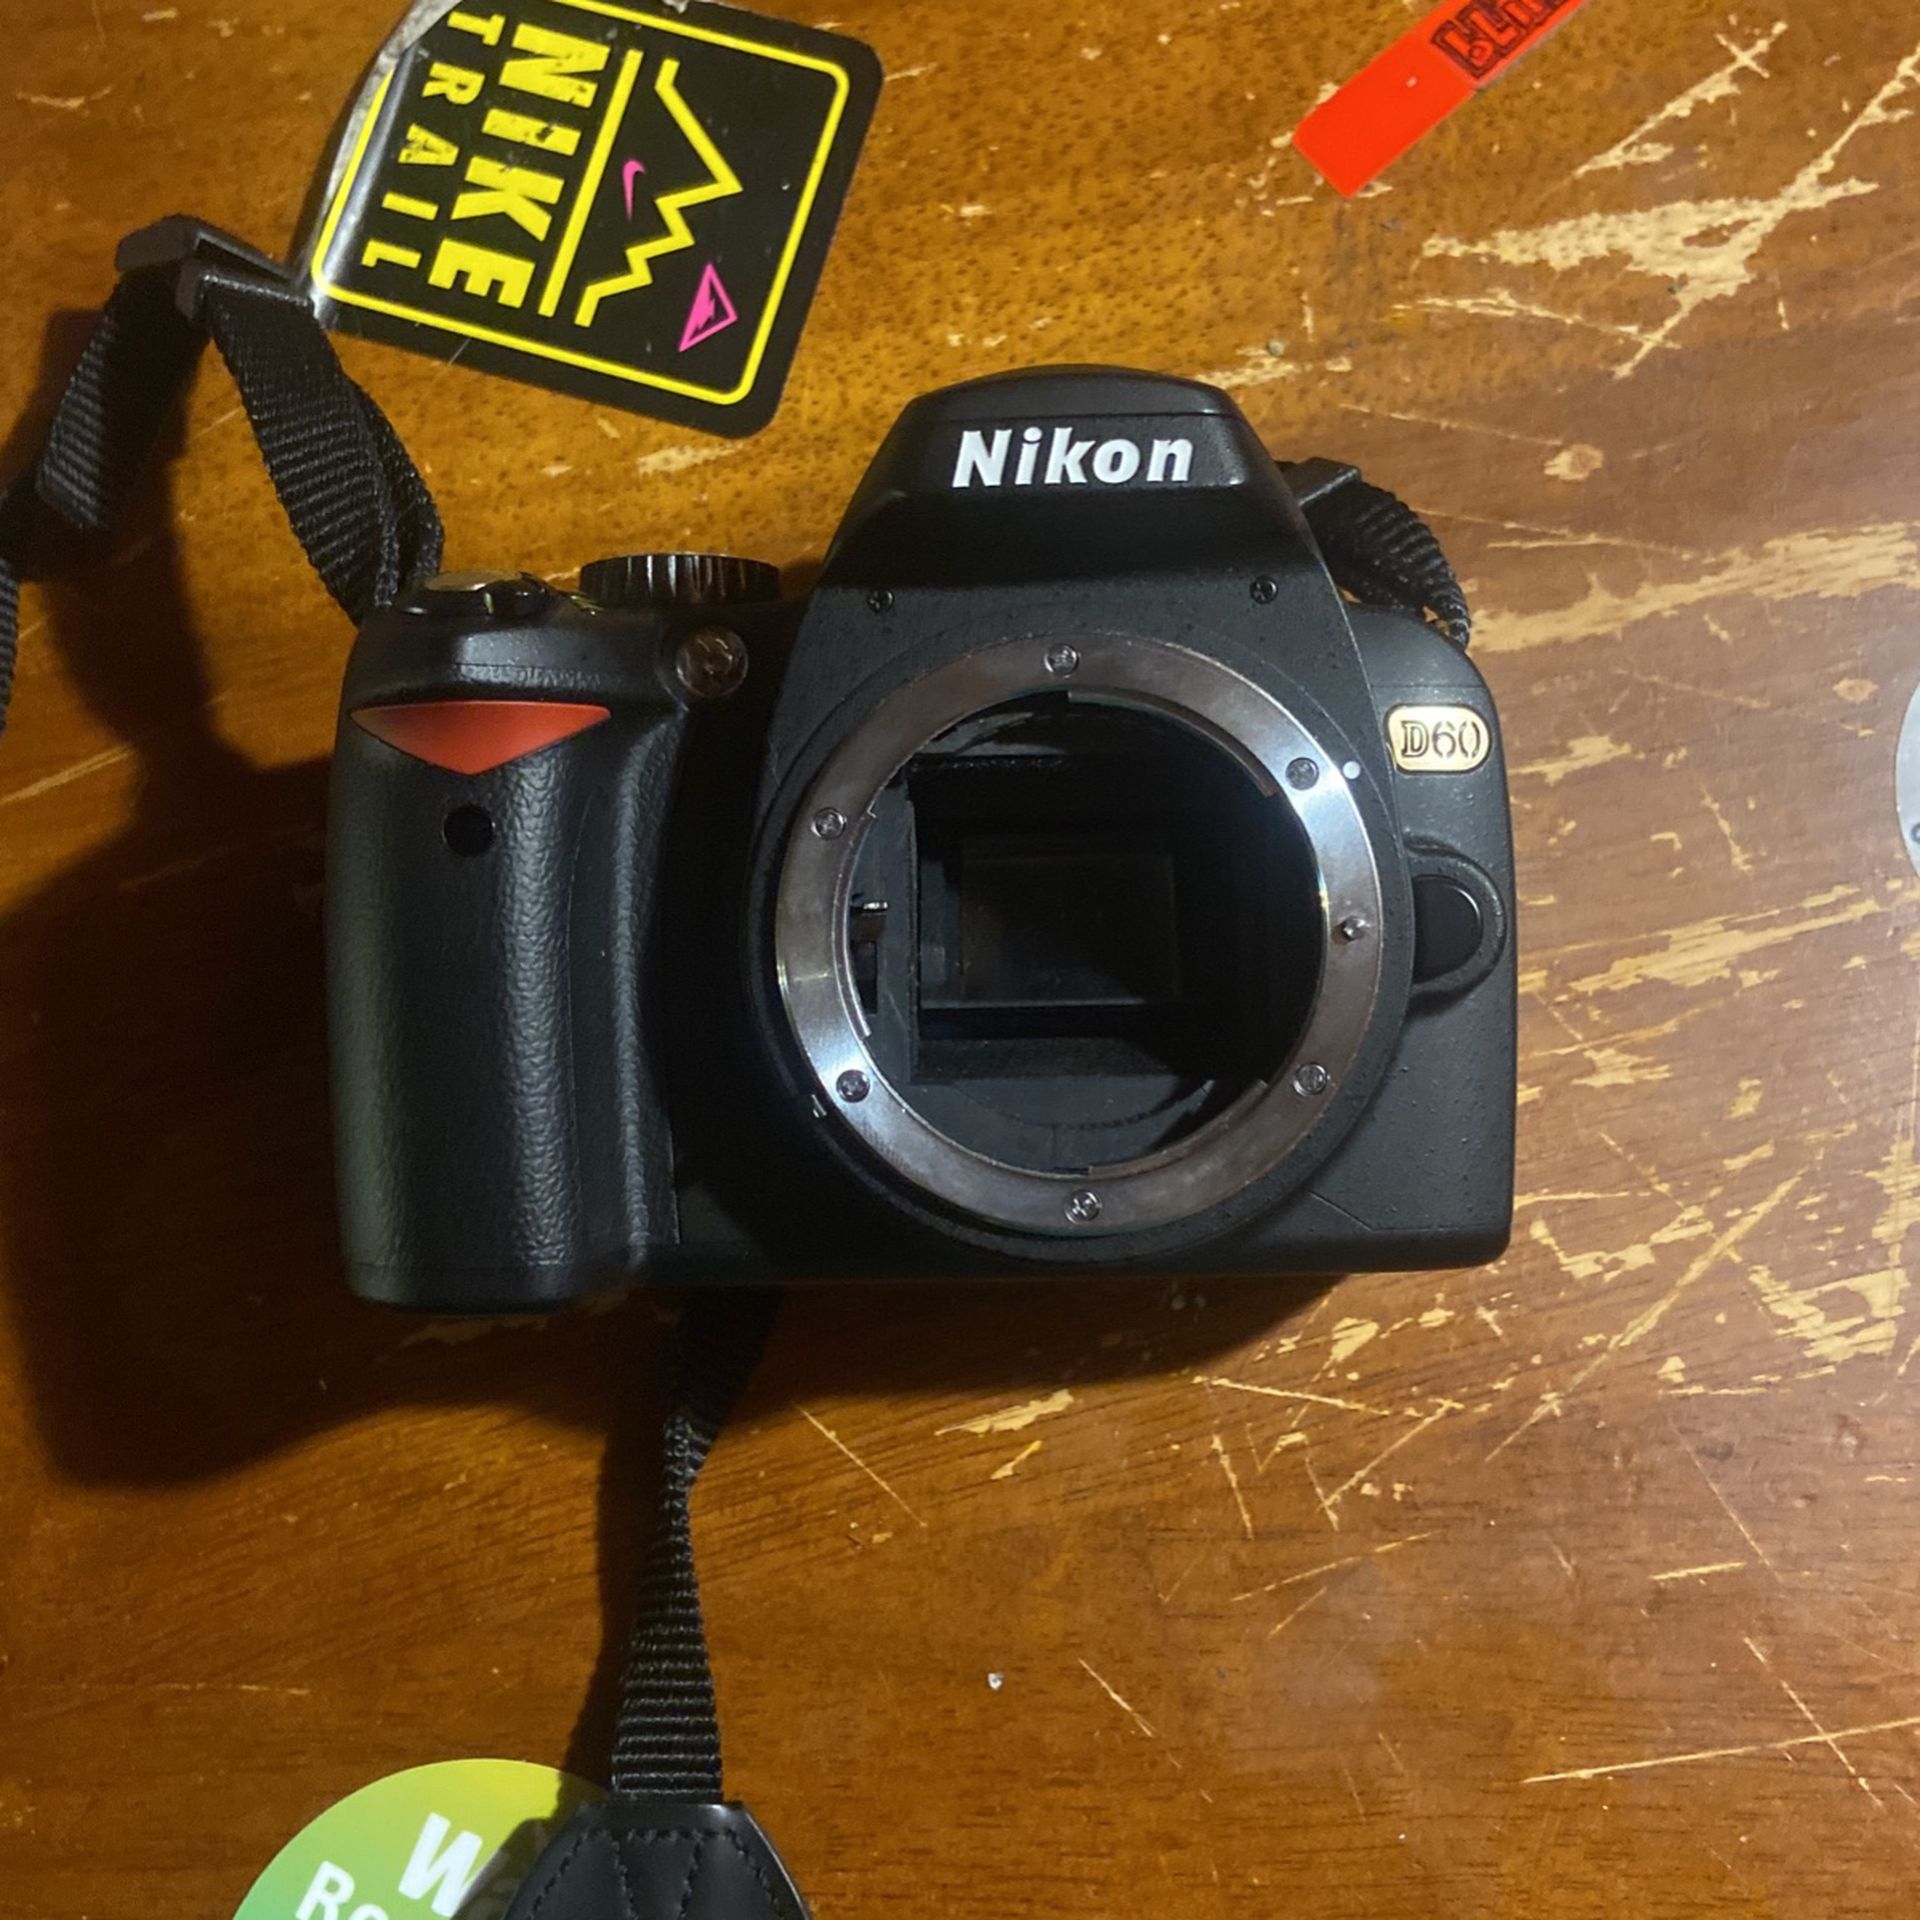 Nikon D60 Gold Edition 